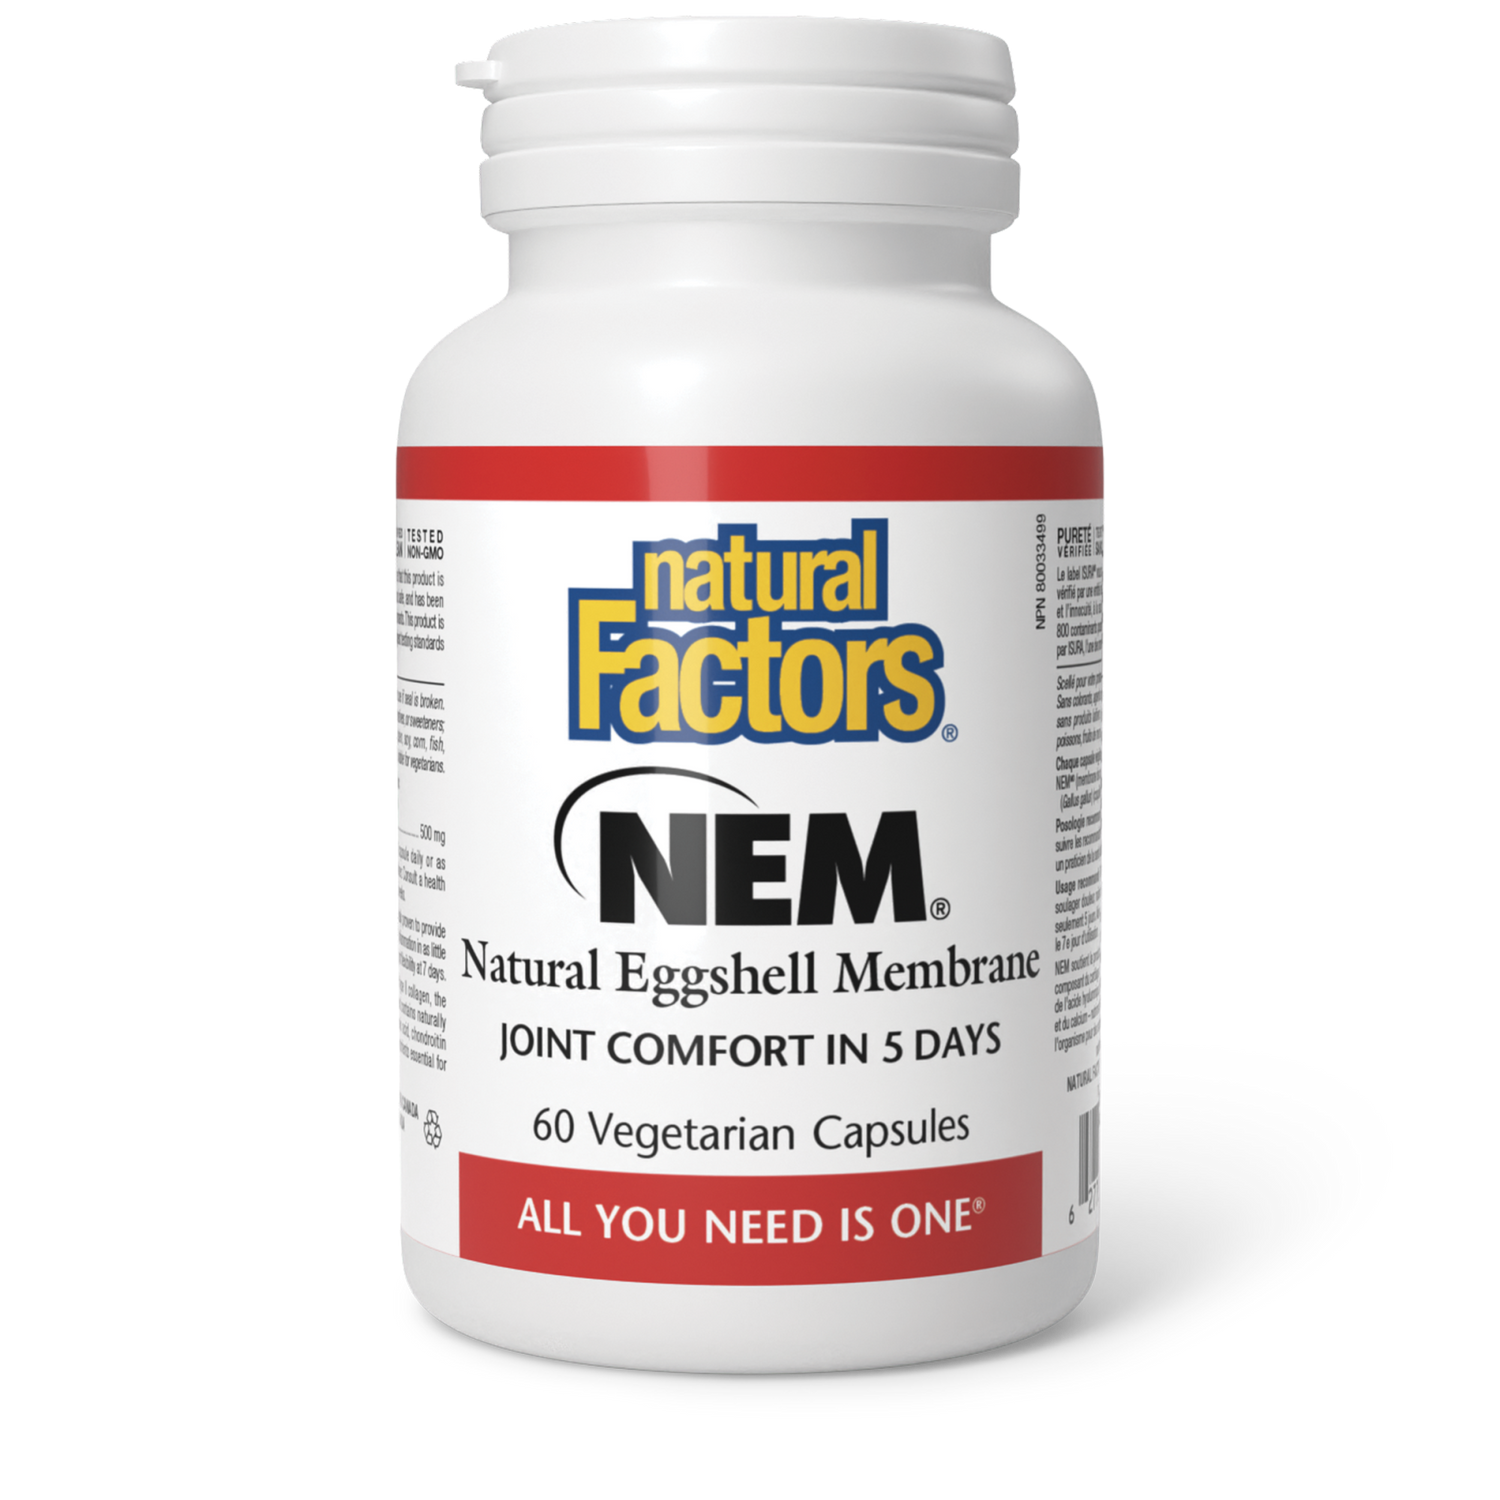 NEM Natural Eggshell Membrane 500 mg, Natural Factors|v|image|2693